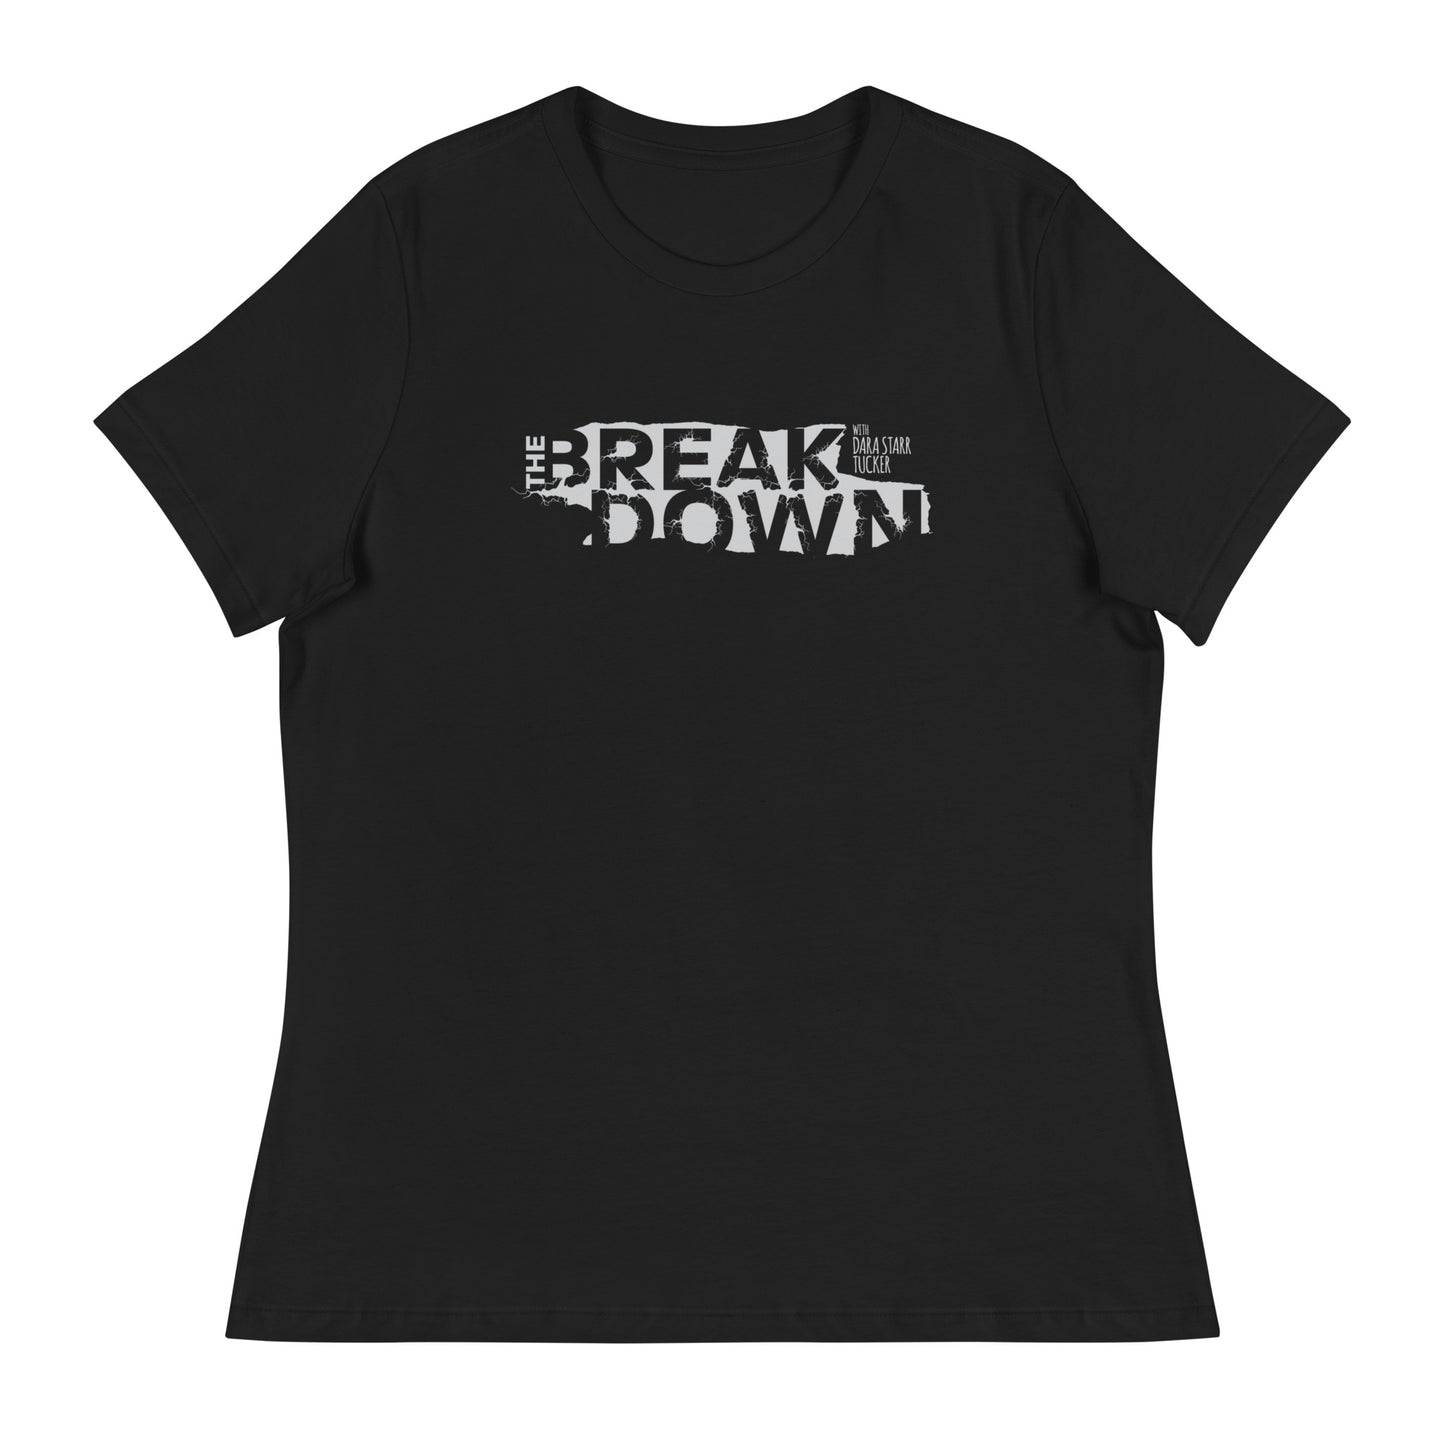 'The Breakdown' Women's Shirt - Black